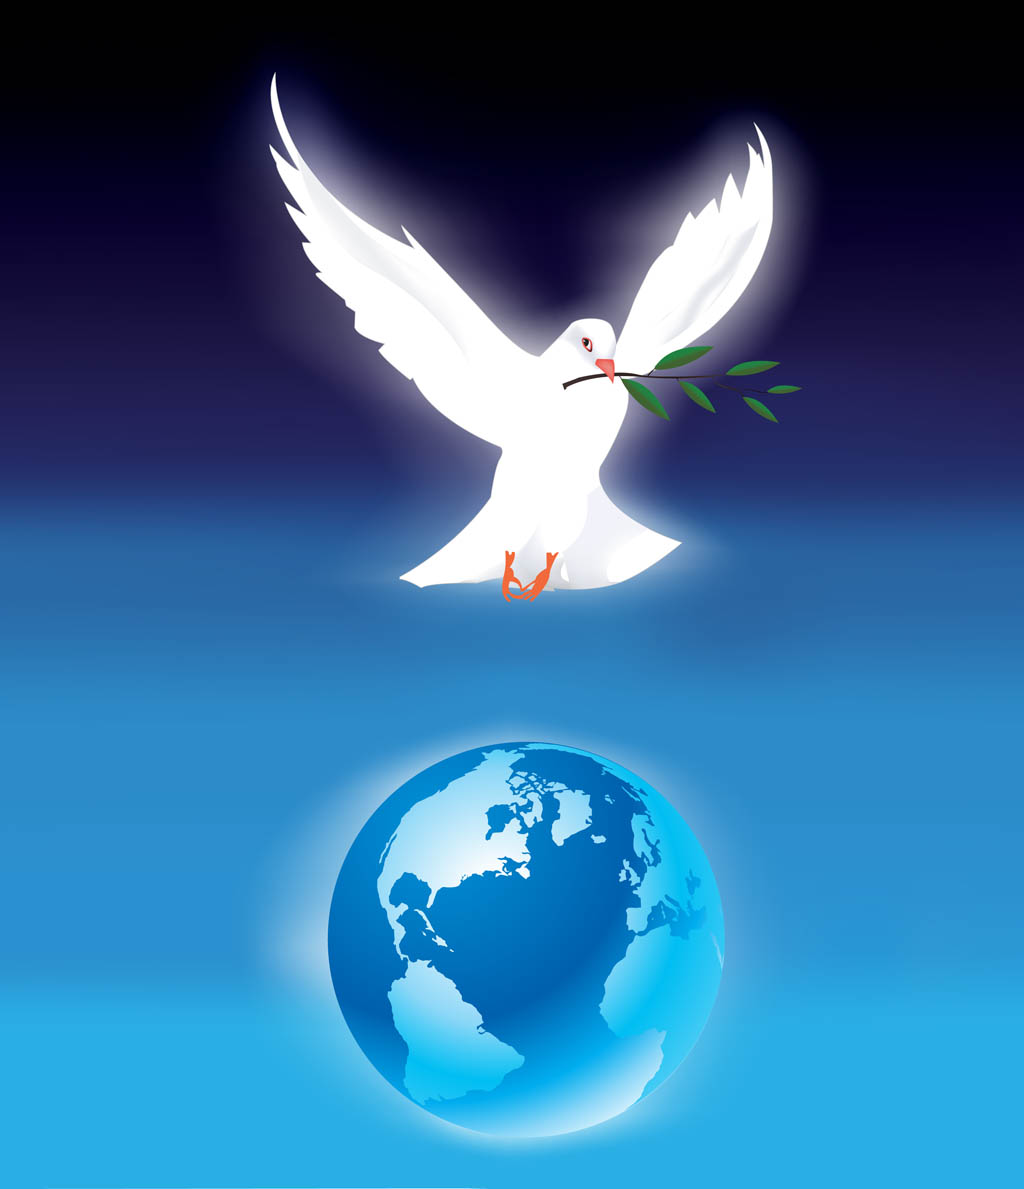 World Peace Poster Ideas